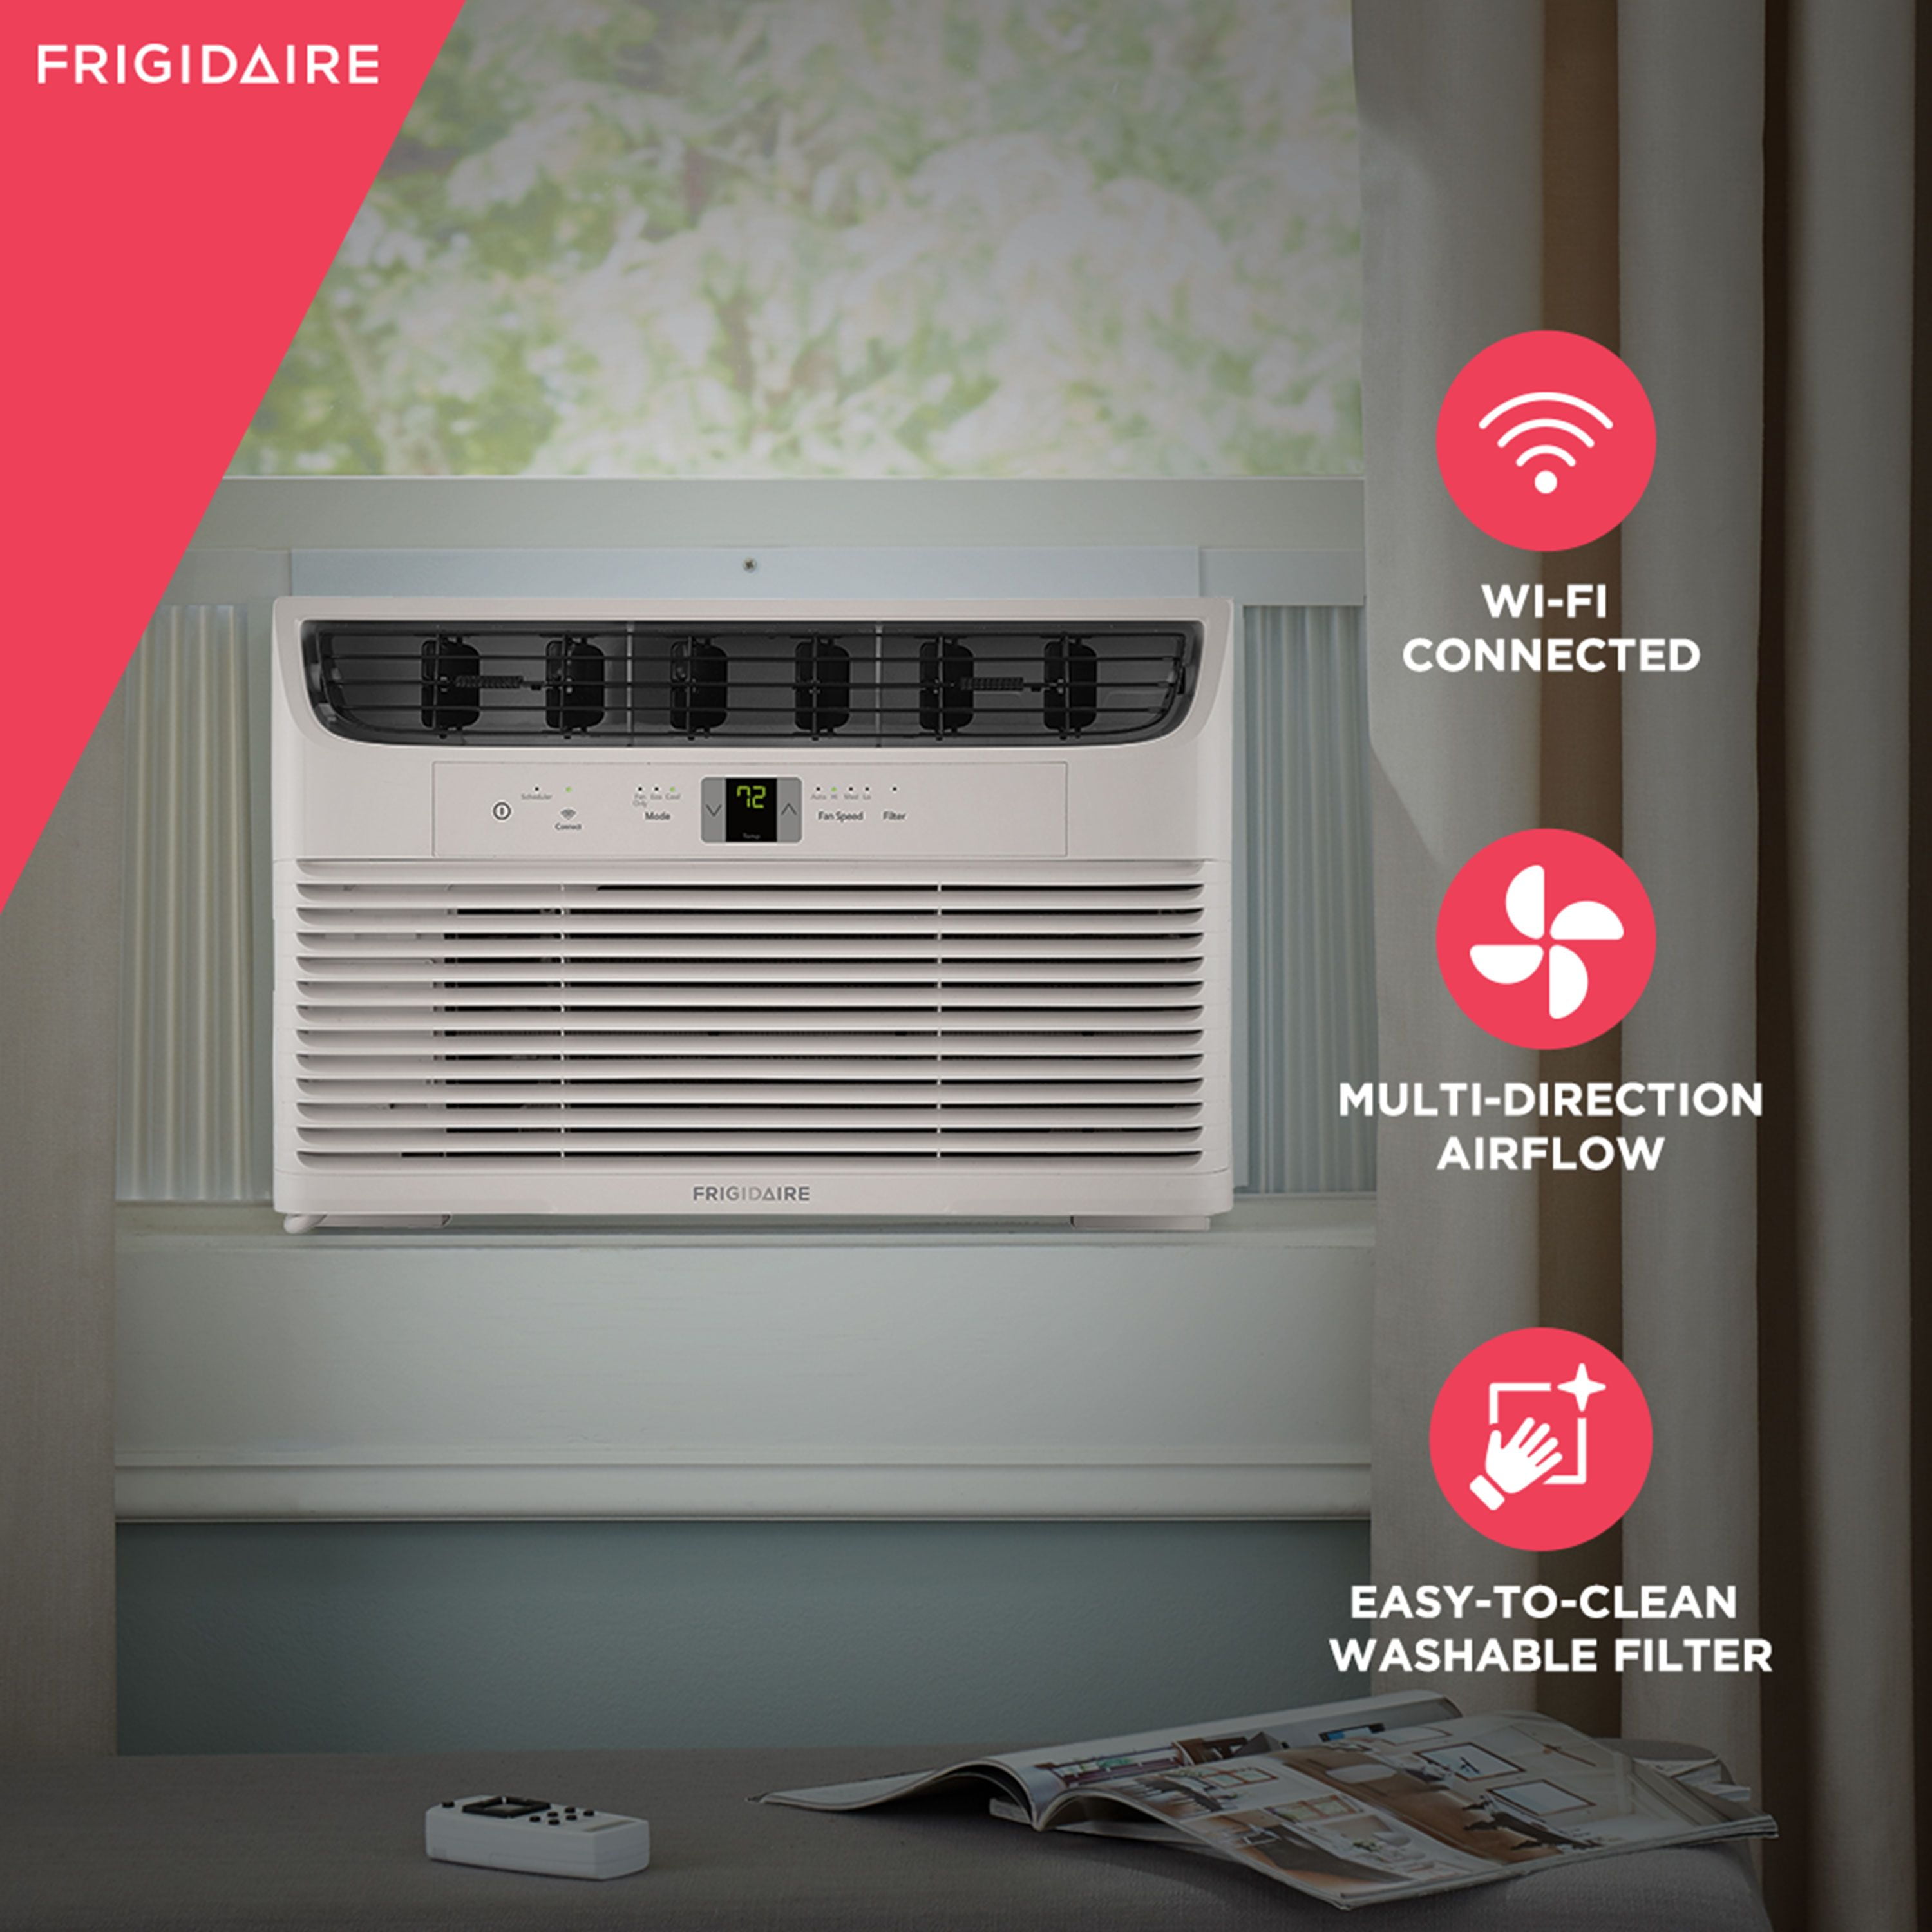 Frigidaire 8,000 BTU 115-Volt Window Air Conditioner with Remote, WIFI, White, FHWW082WCE Walmart.com